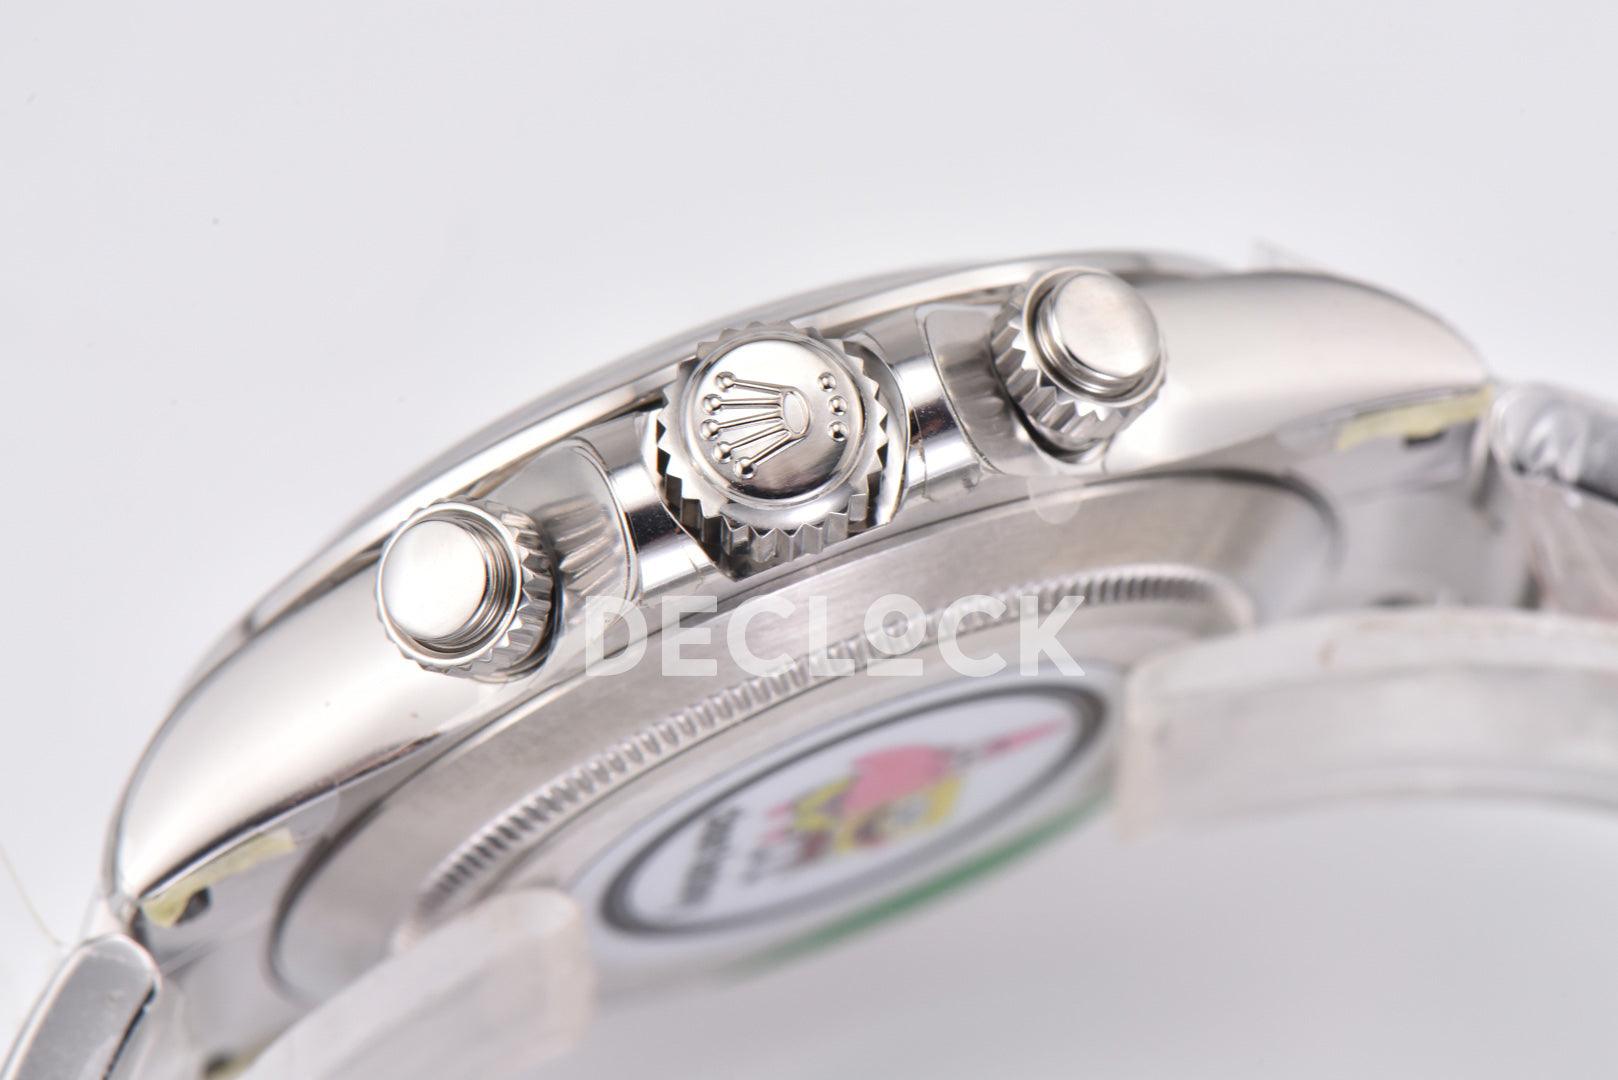 Replica Rolex Daytona 116520 Steel in Black Dial - Replica Watches